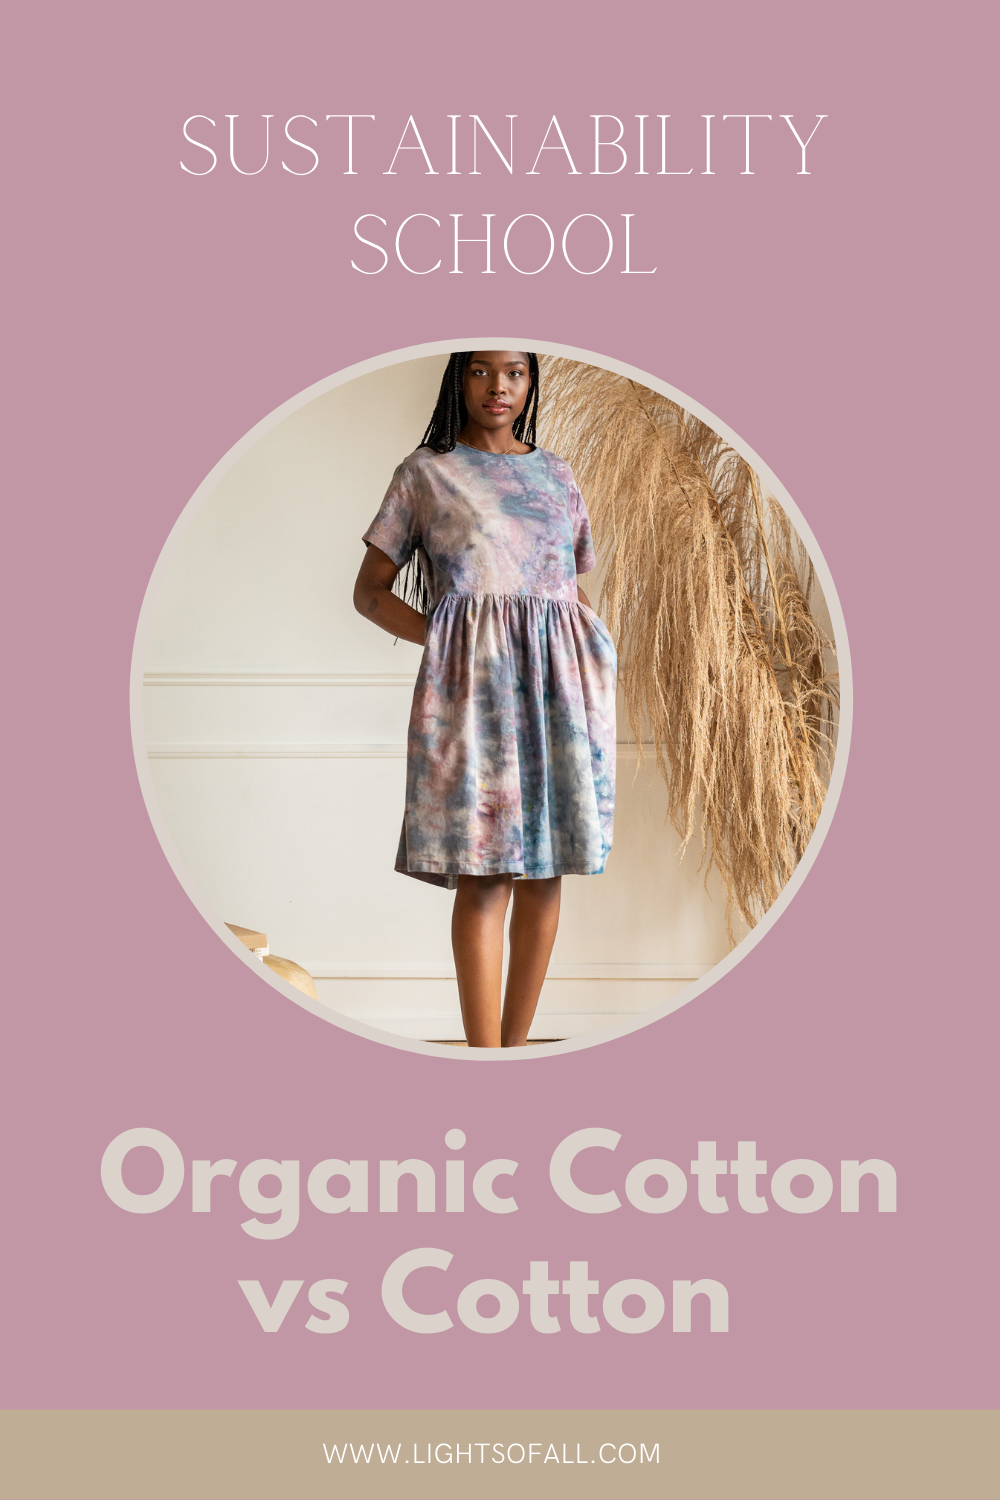 Sustainability School: Organic Cotton